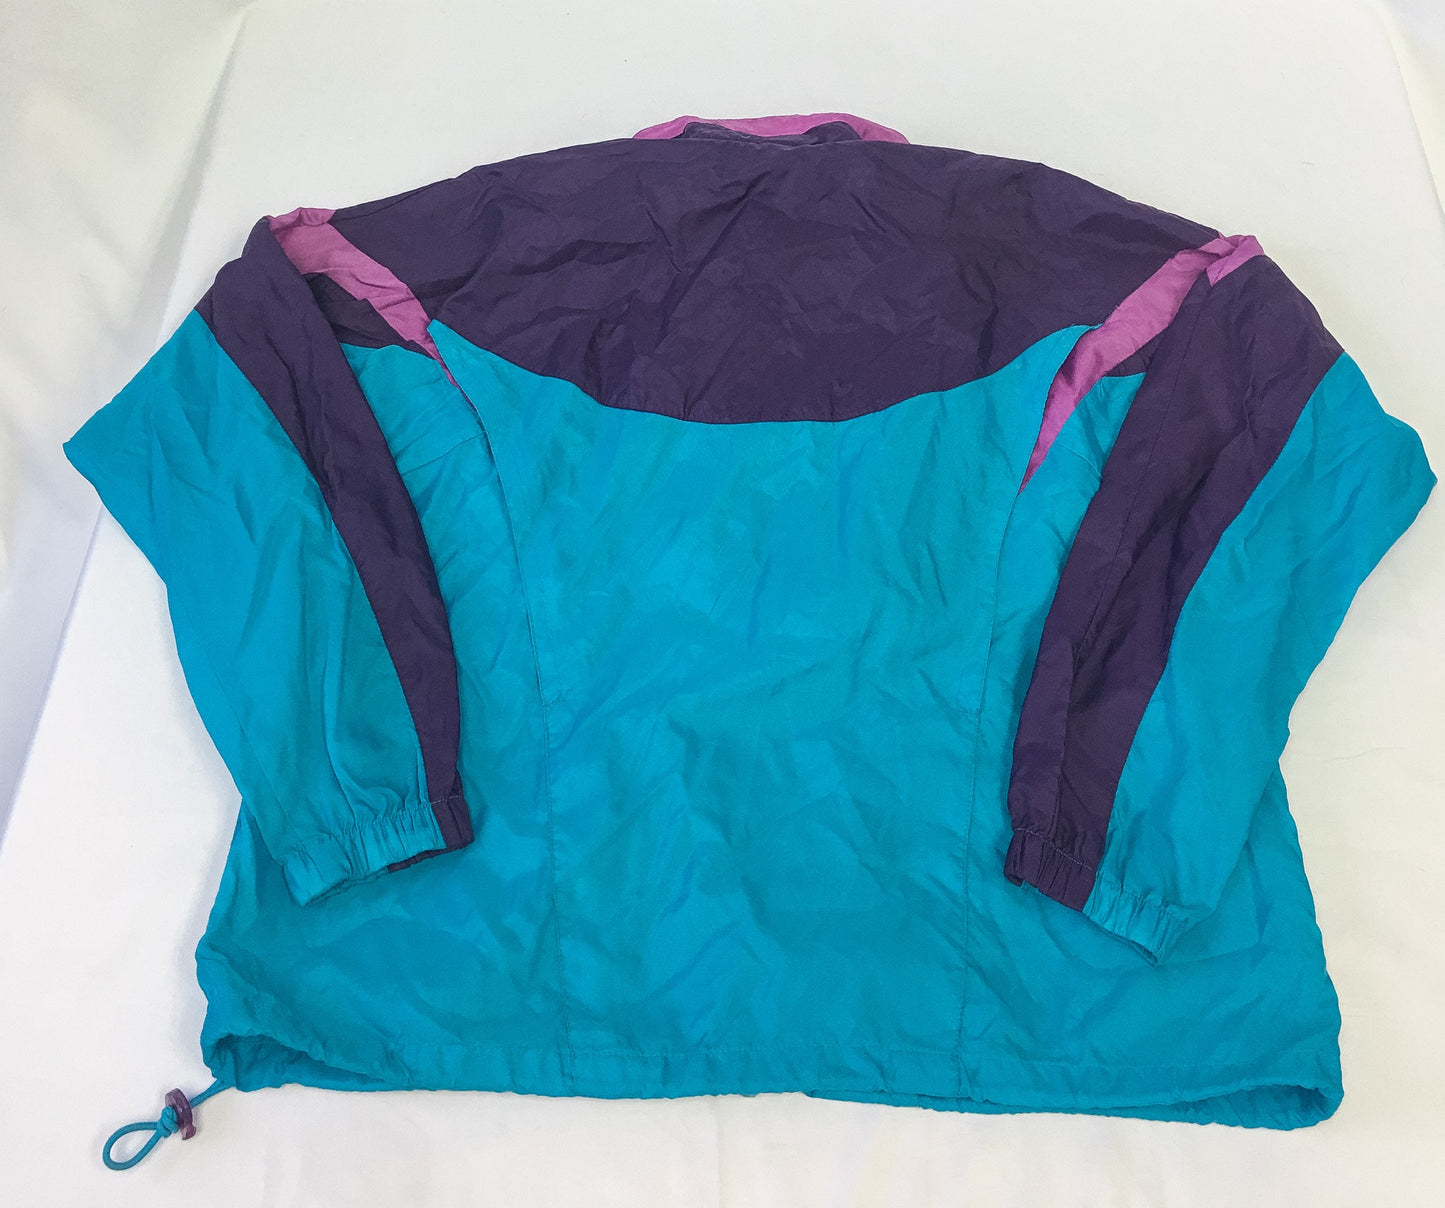 Vintage 90s Nike Teal and Purple Windbreaker Jacket with Detachable Hood, 1990s Nike Jacket